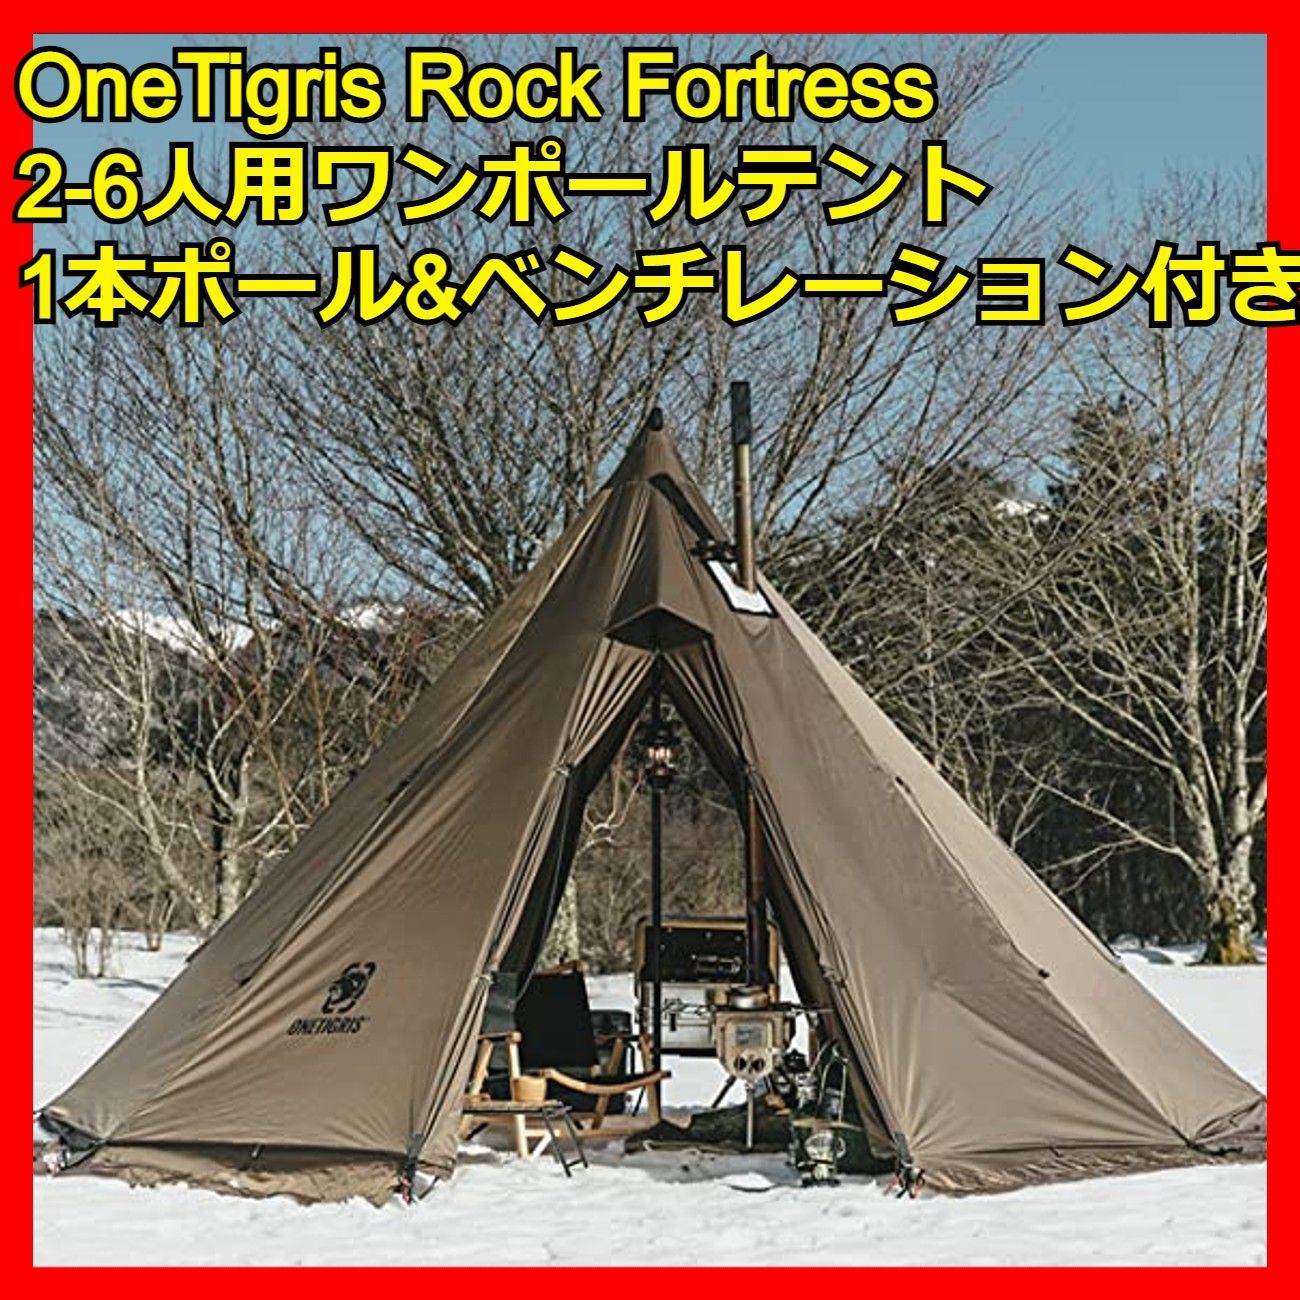 OneTigris Rock Fortressホットテント ワンポールテント